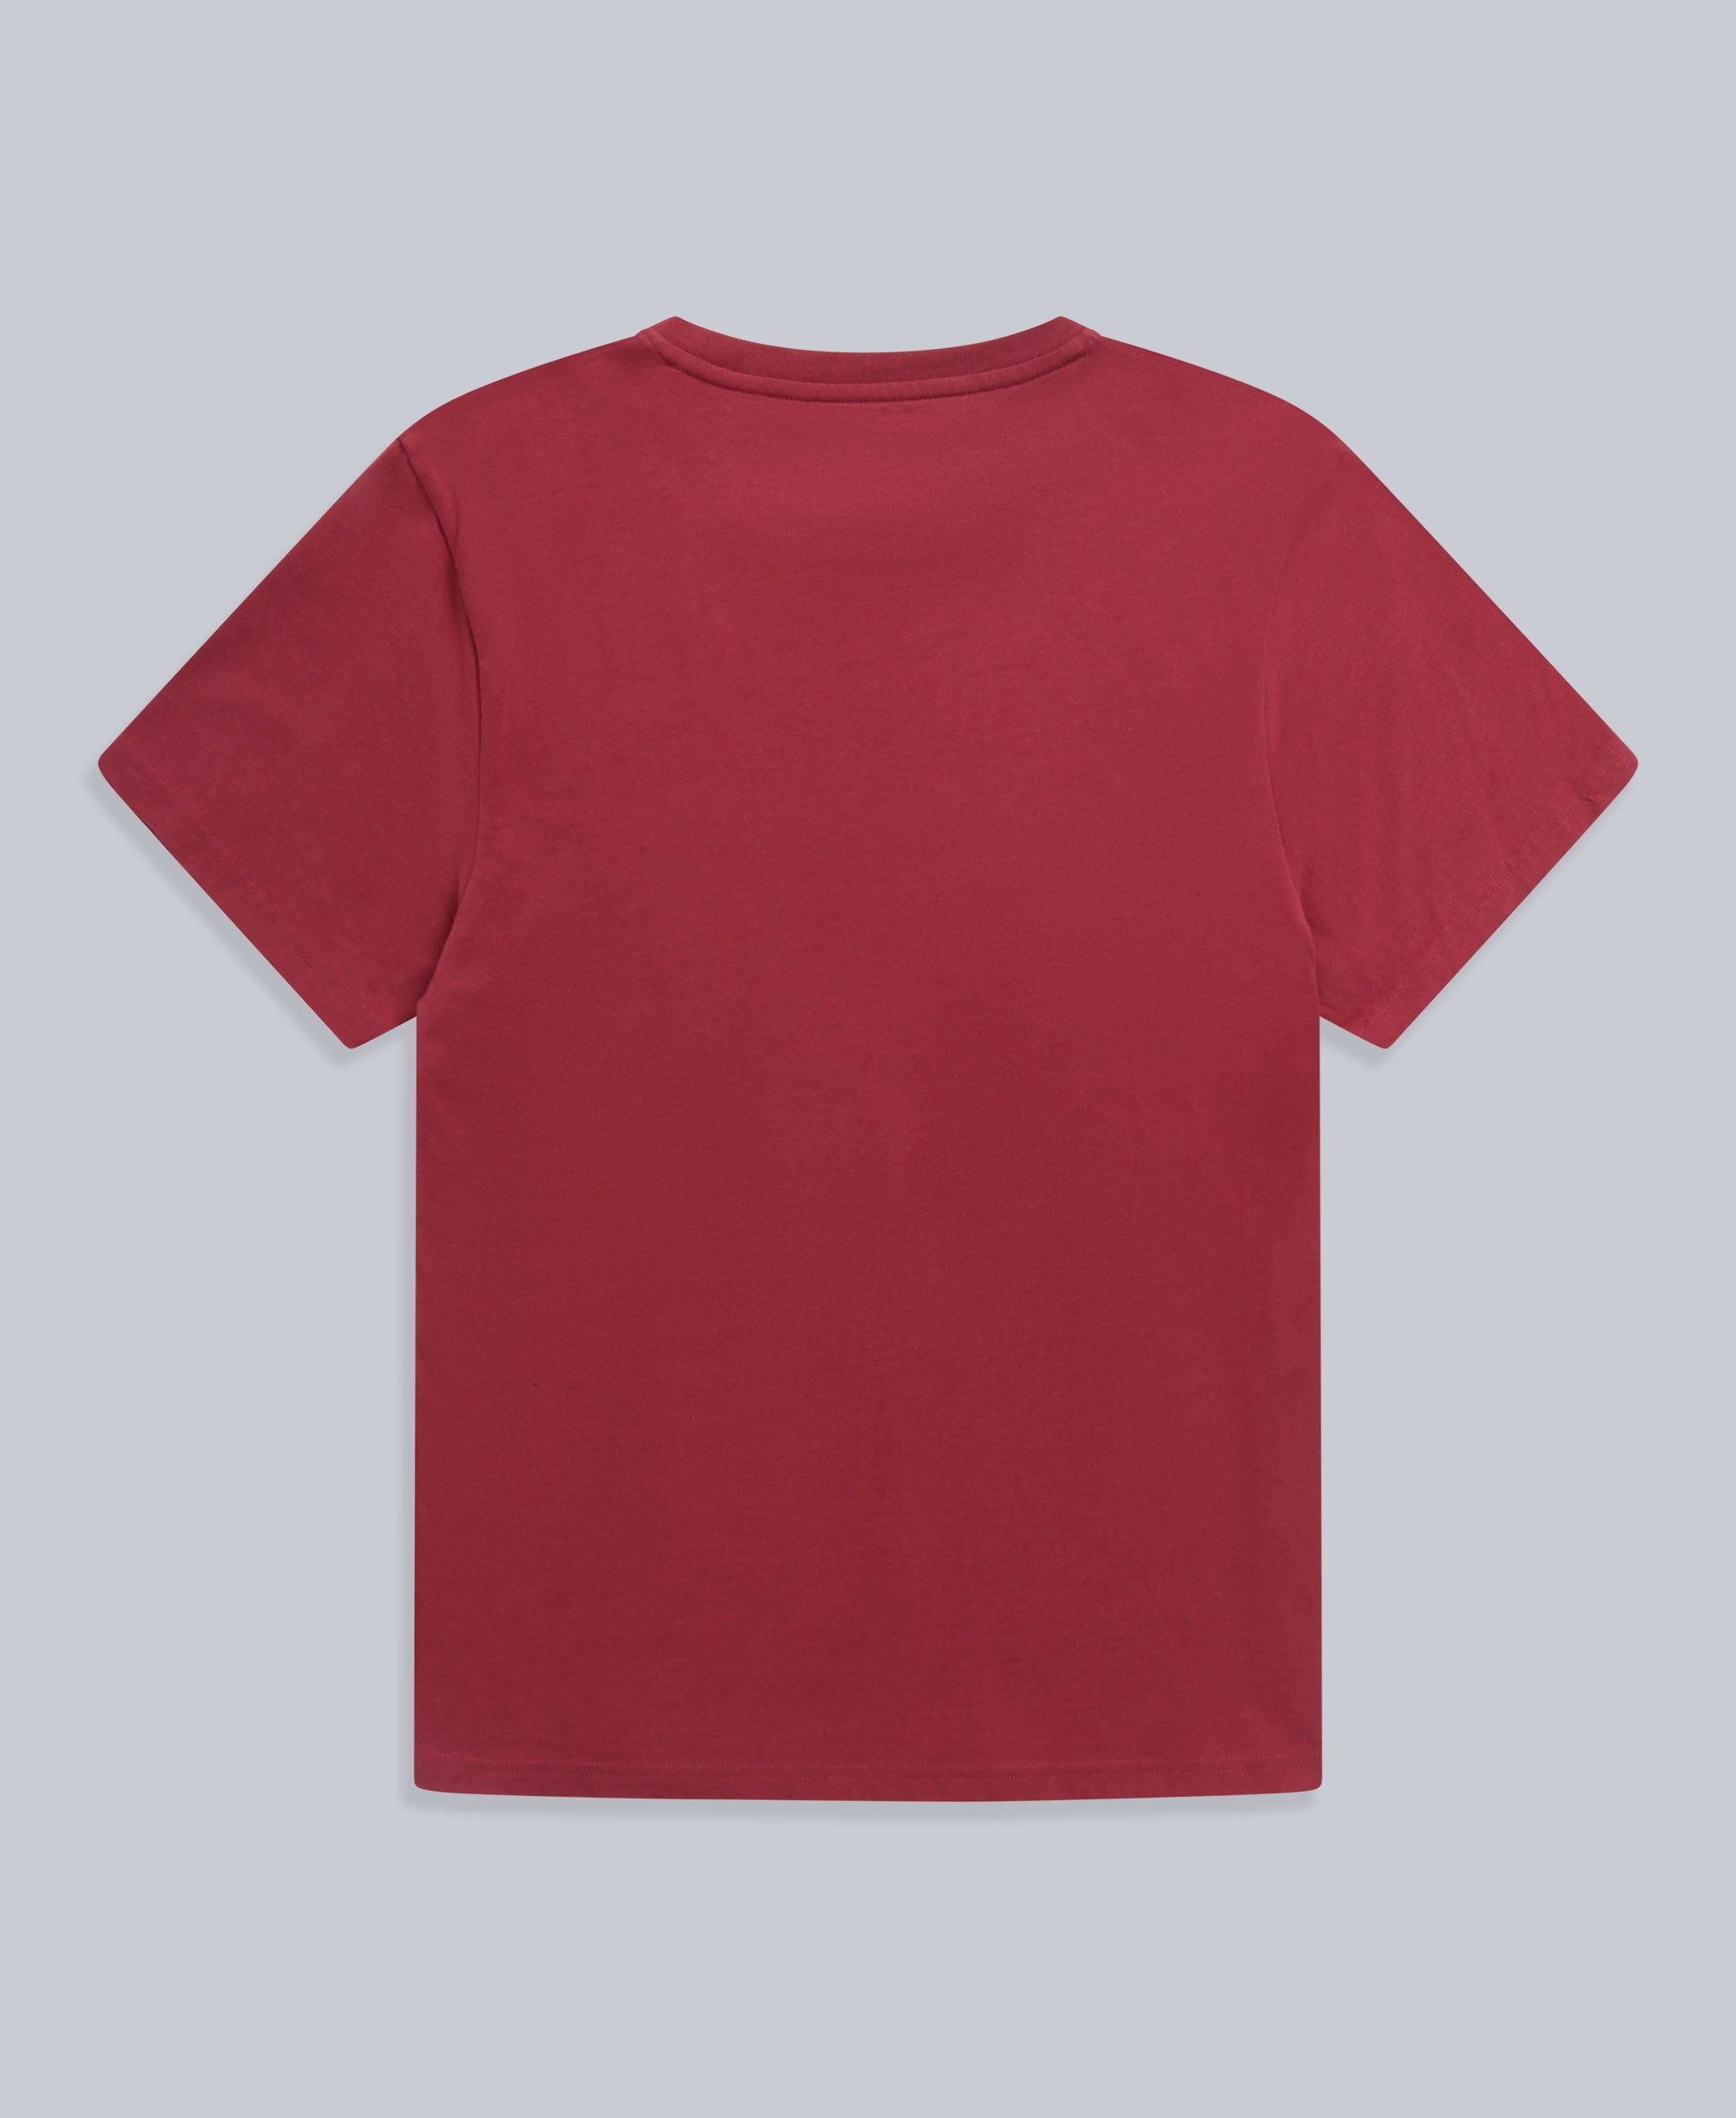 Classico Mens Organic T-Shirt - Burgundy